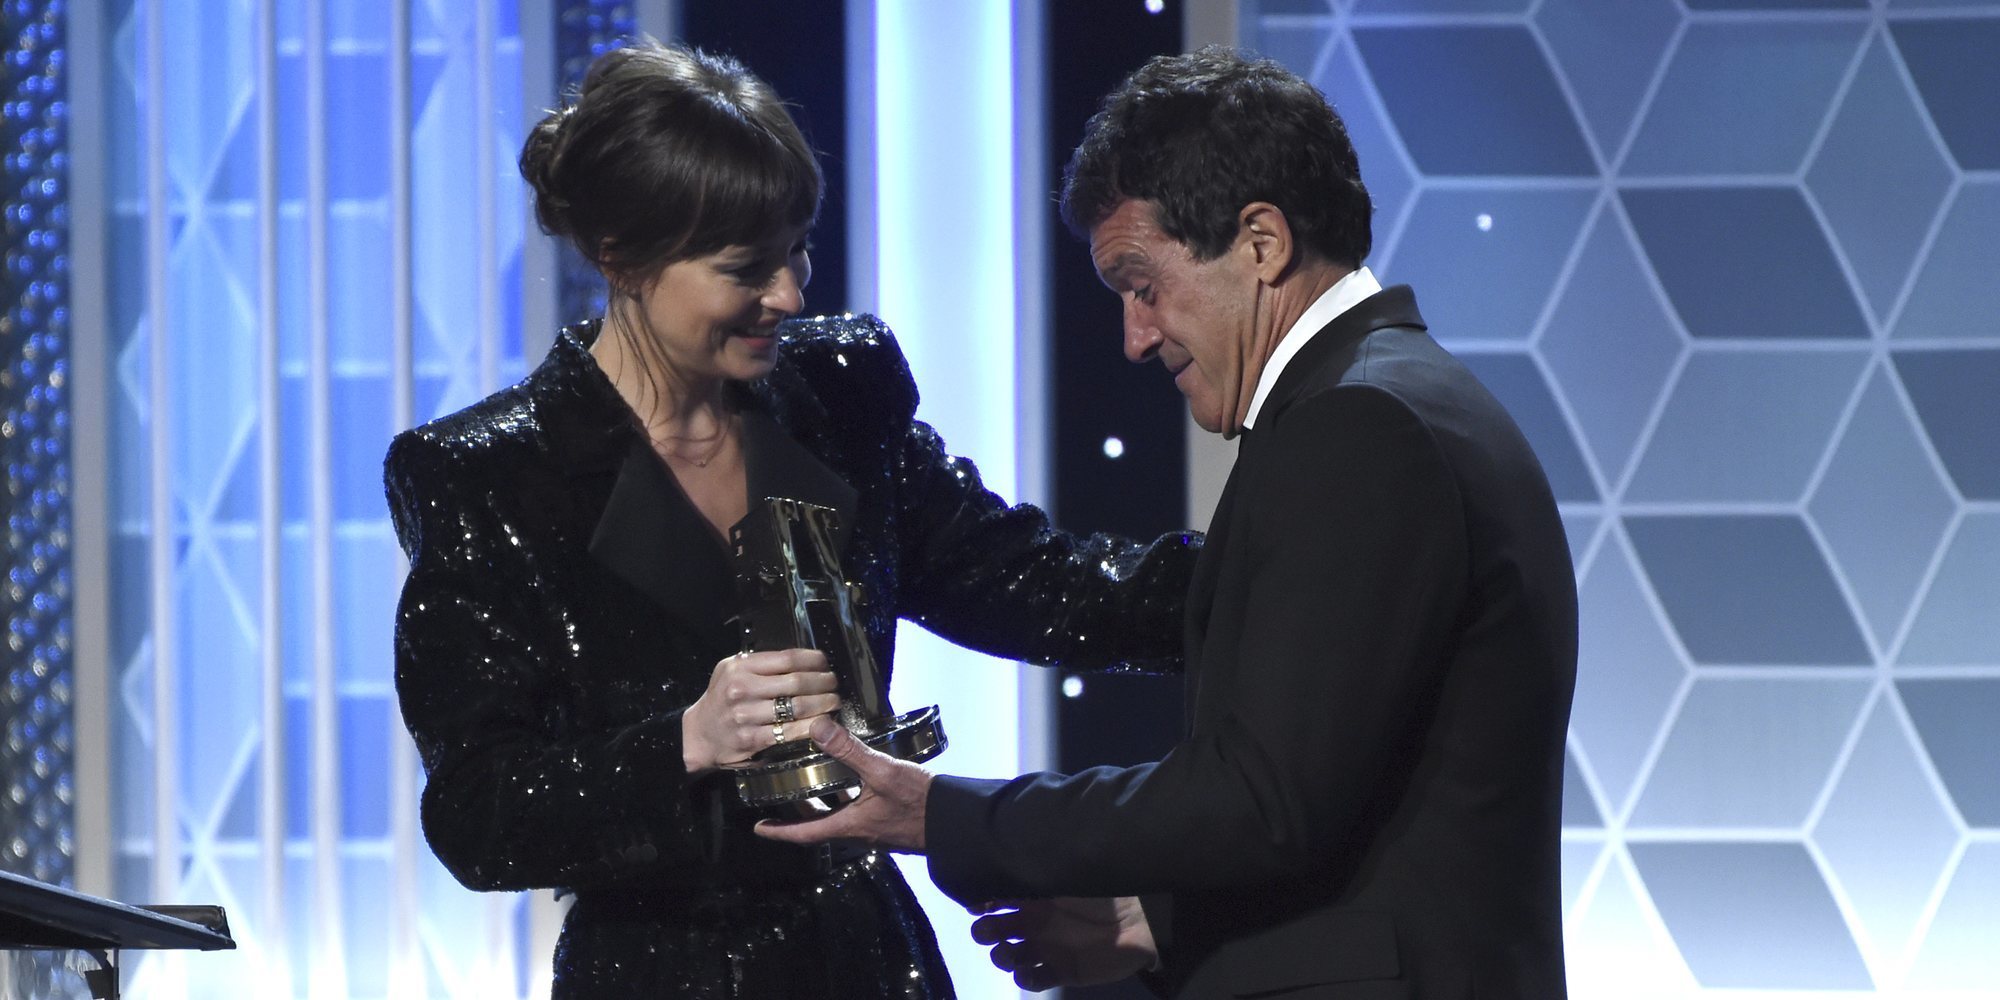 Dakota Johnson entrega un premio a Antonio Banderas en la gala Hollywood Film Awards 2019